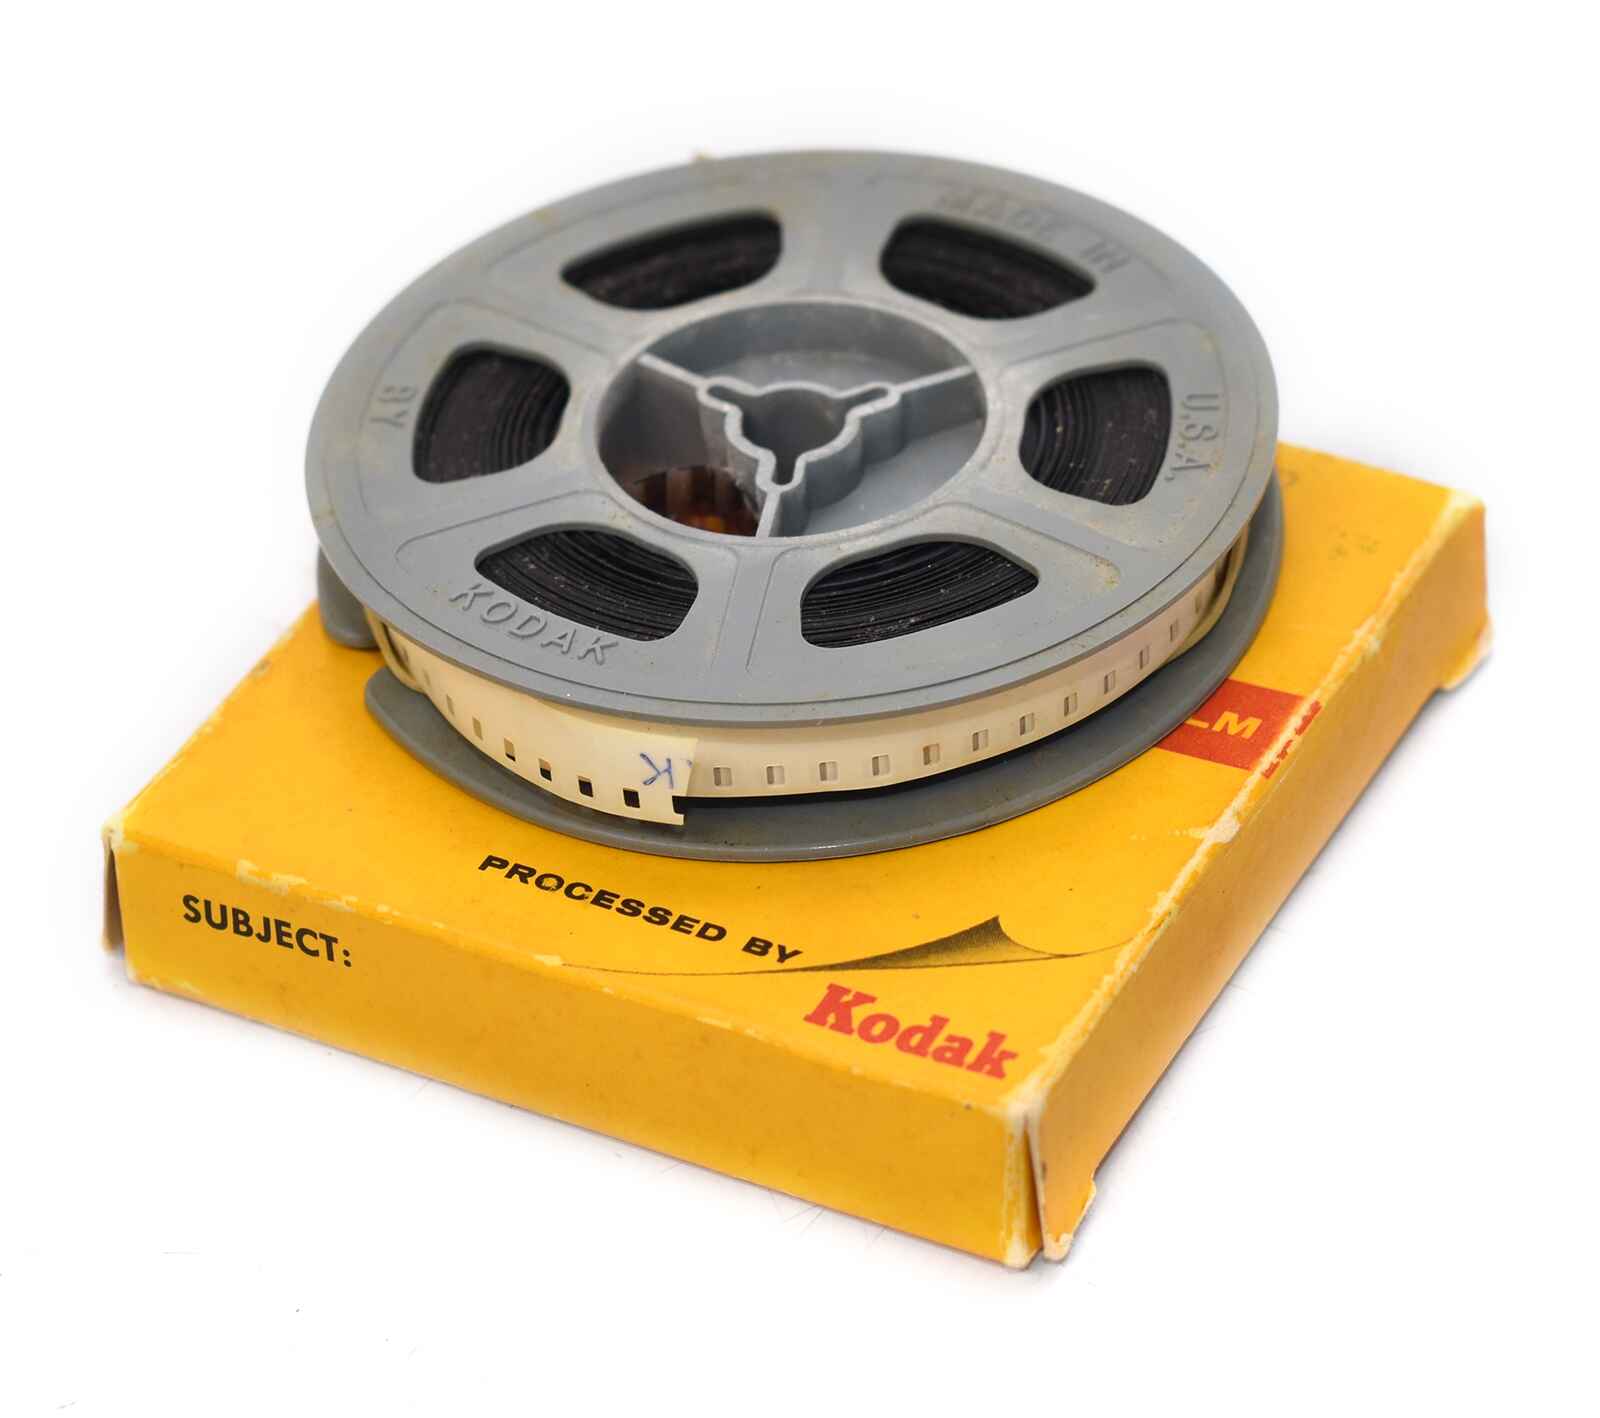 8mm cine film to DVD or MP4/USB transfer, Gravesend, Dartford, Medway, Maidstone